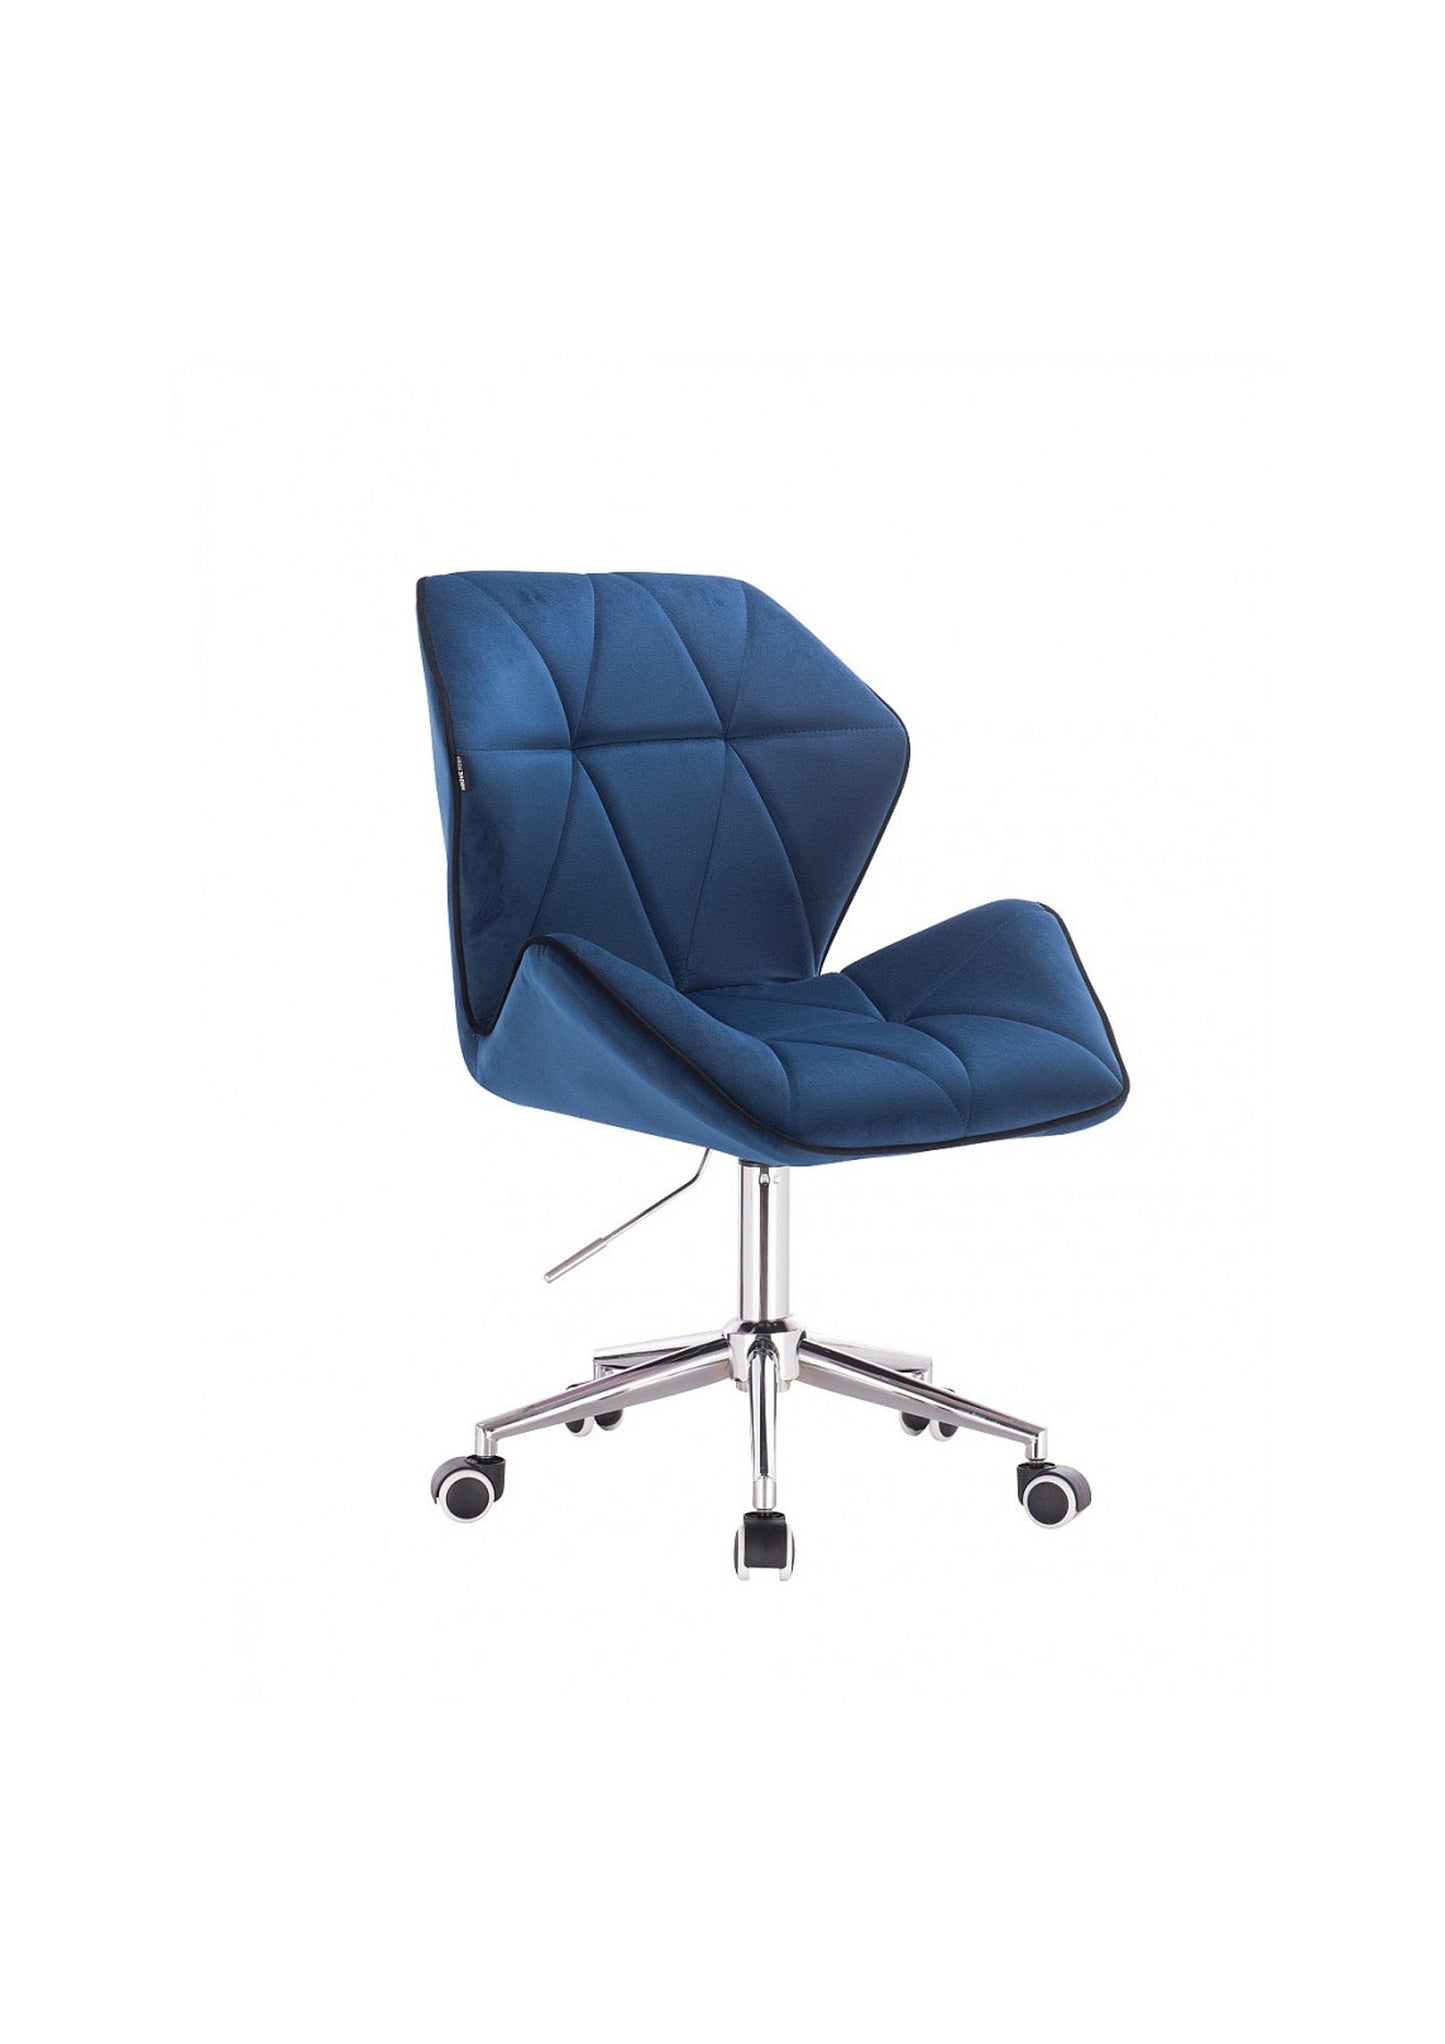 NEW Designer adjustable Higher Back swivel office/desk chair with silver base in velvet  Green/ Black / Grey / Blue